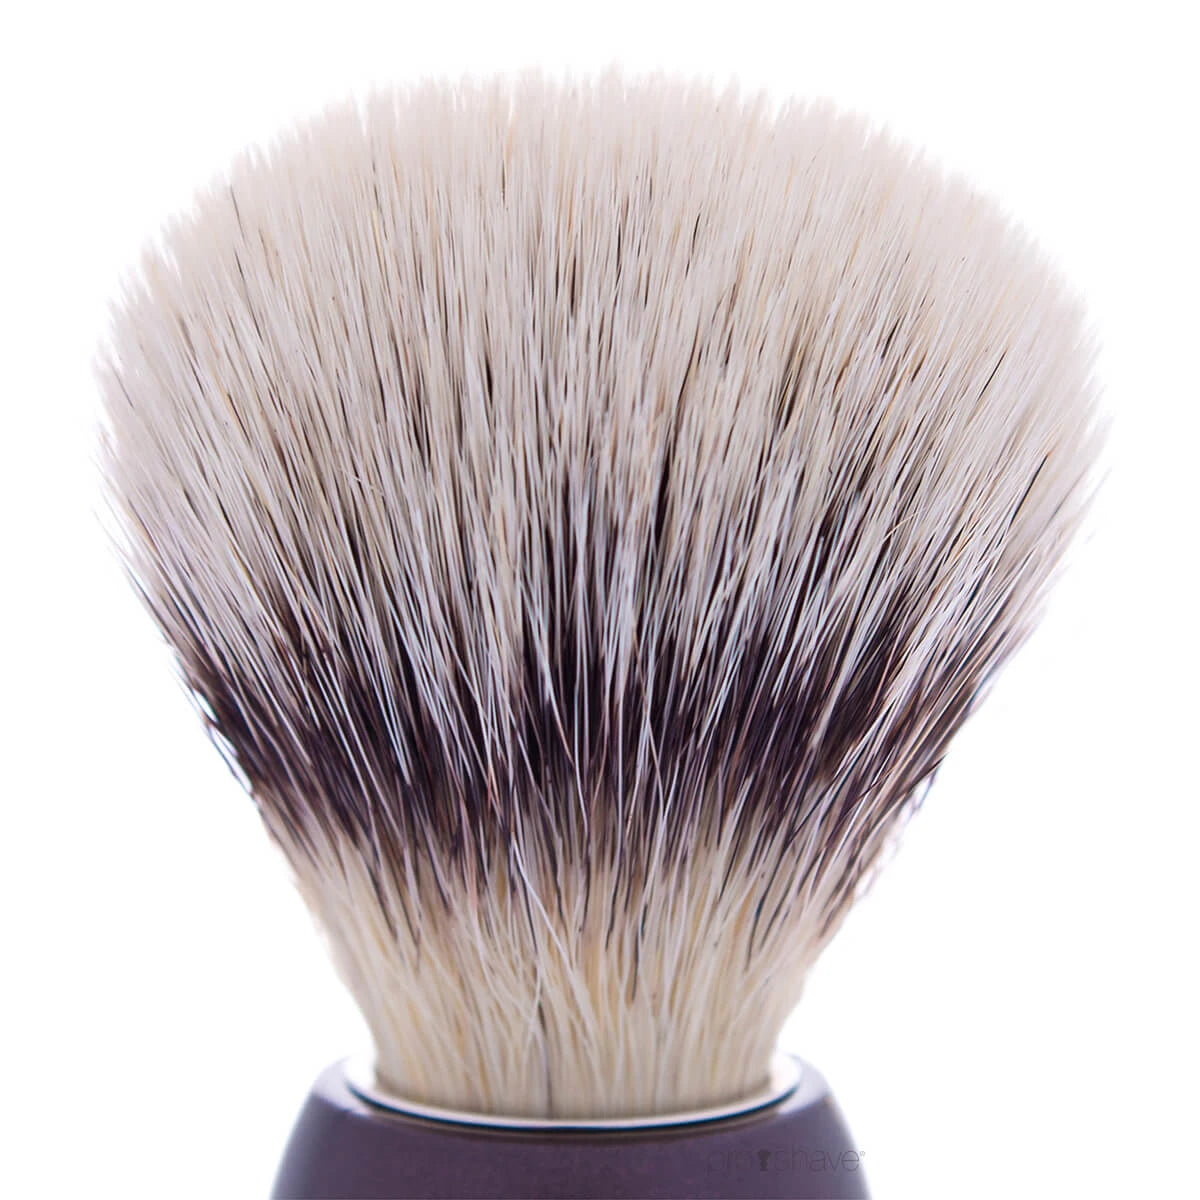 Plisson Shaving Brush, High Mountain White Fibre & Pearl Brown- Size 12